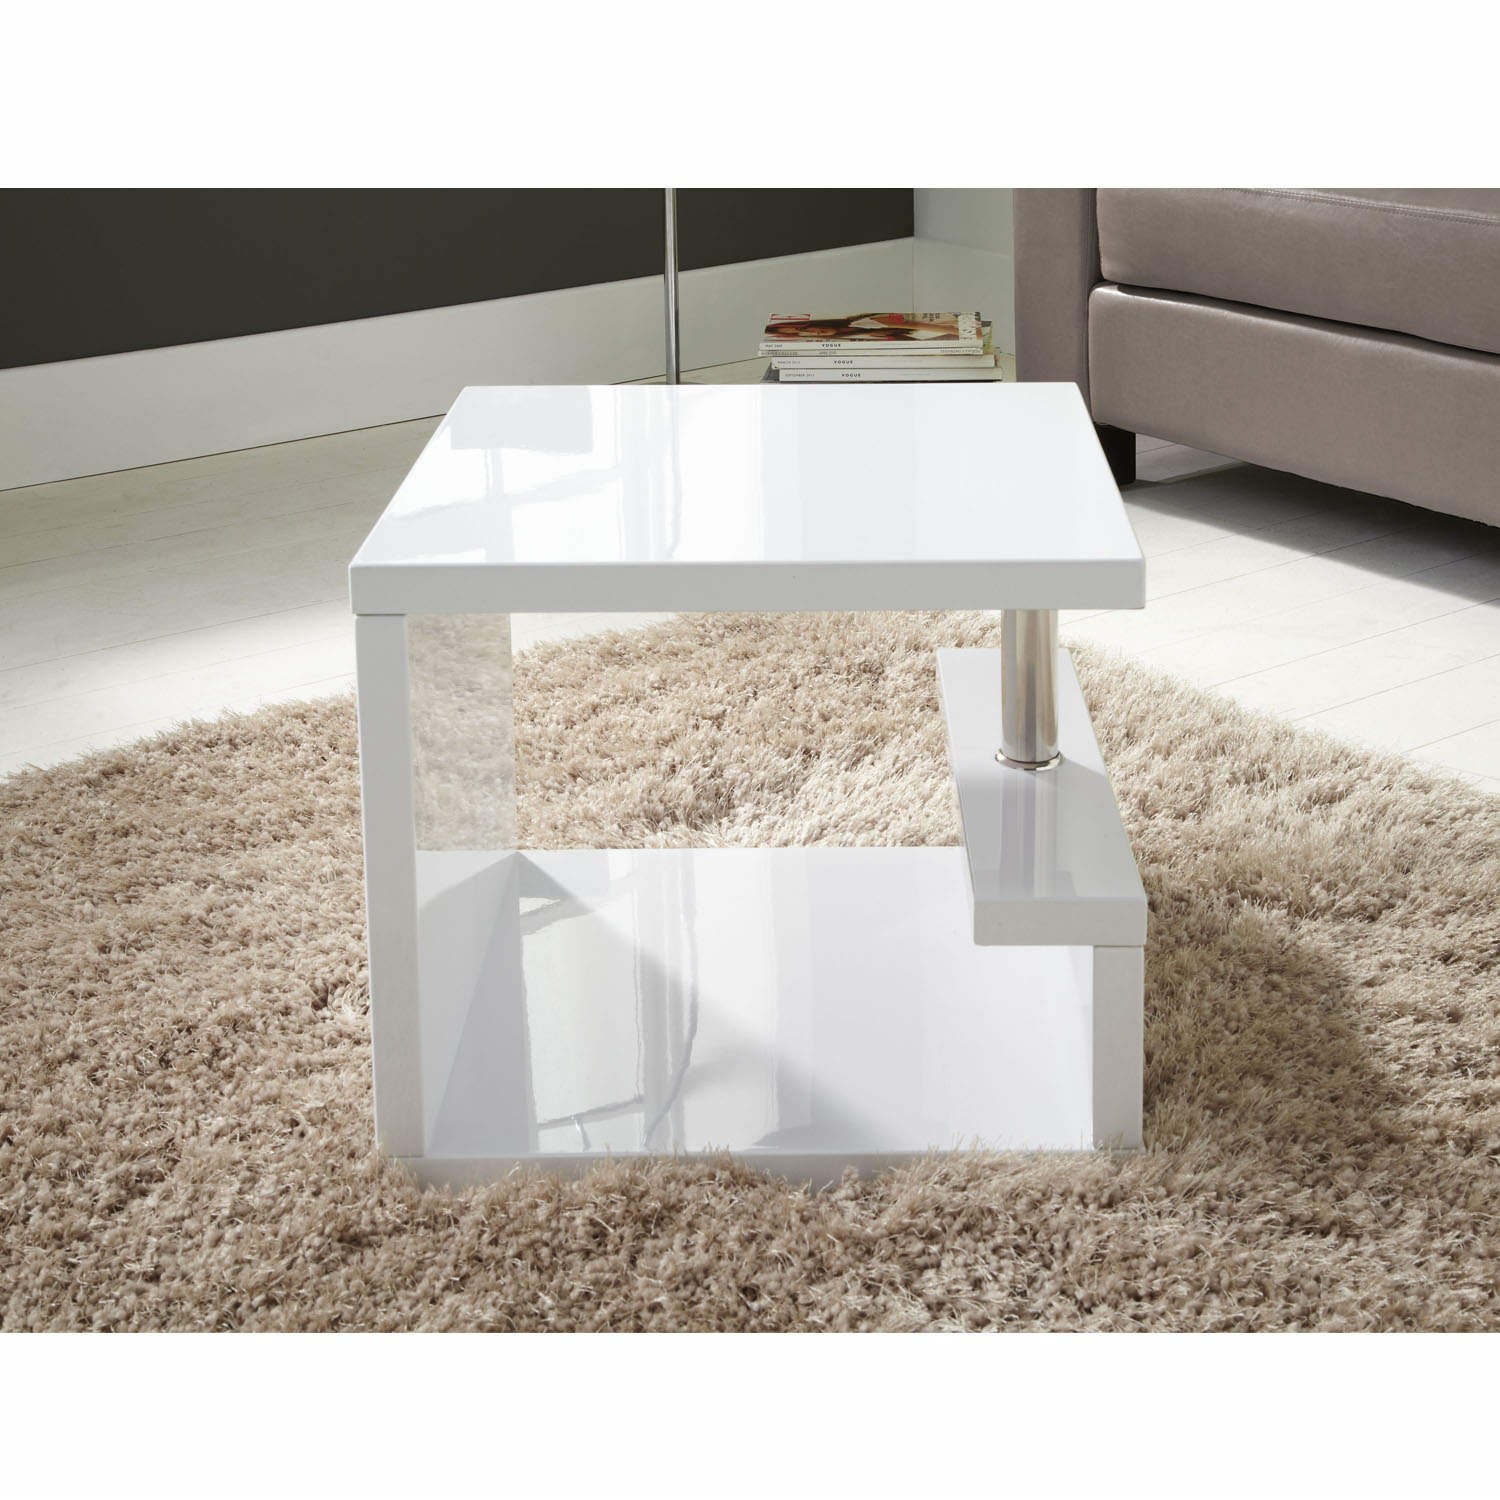 Artemis High Gloss White Side Table, Ikea High Gloss Lamp Table